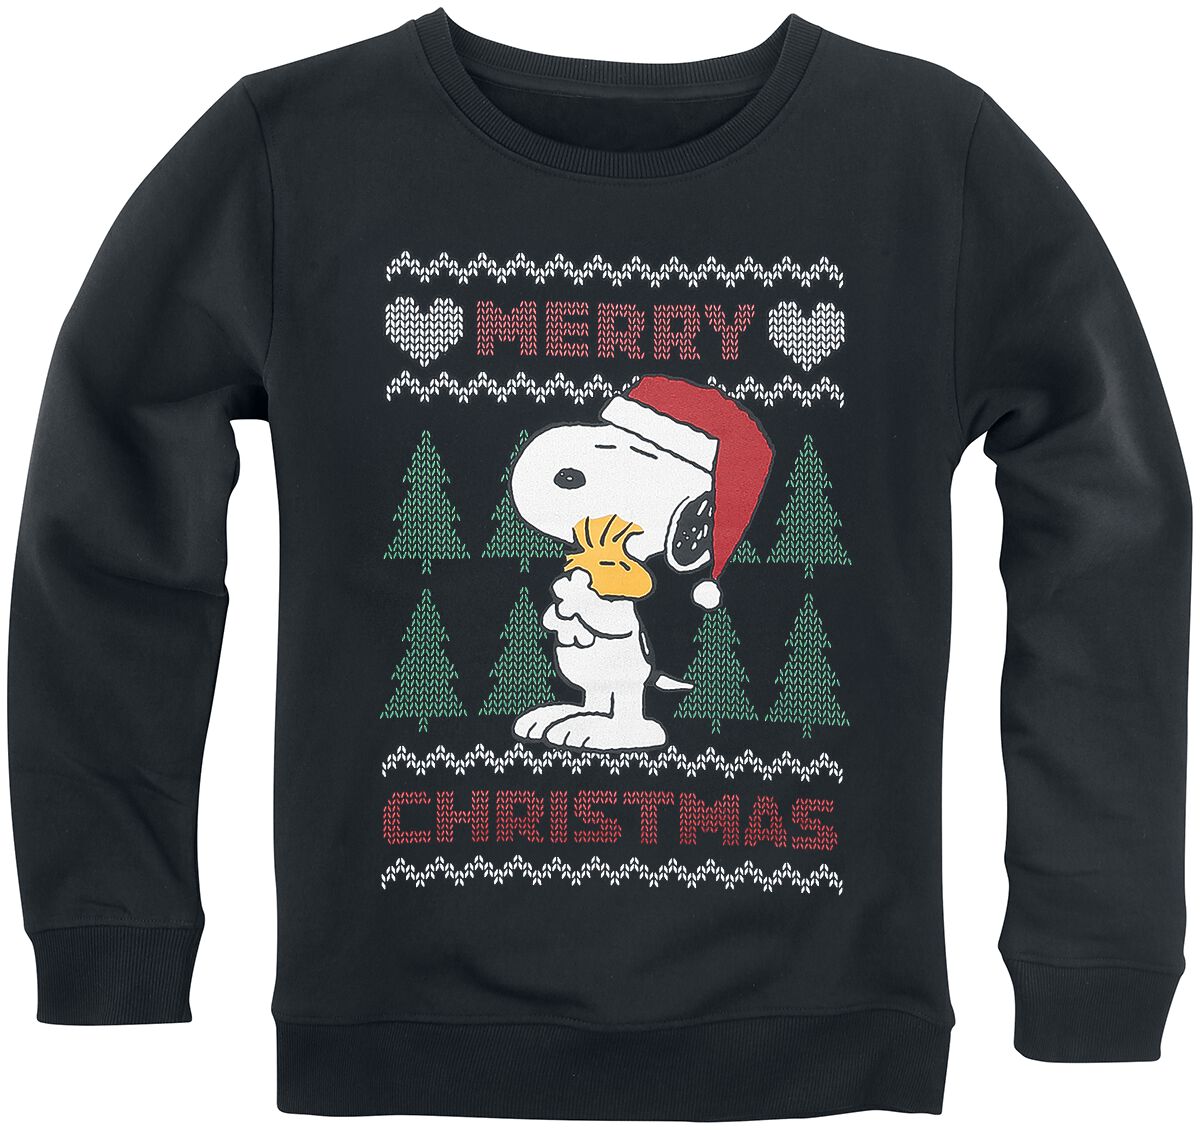 Peanuts Kids - Merry Christmas Sweatshirt black